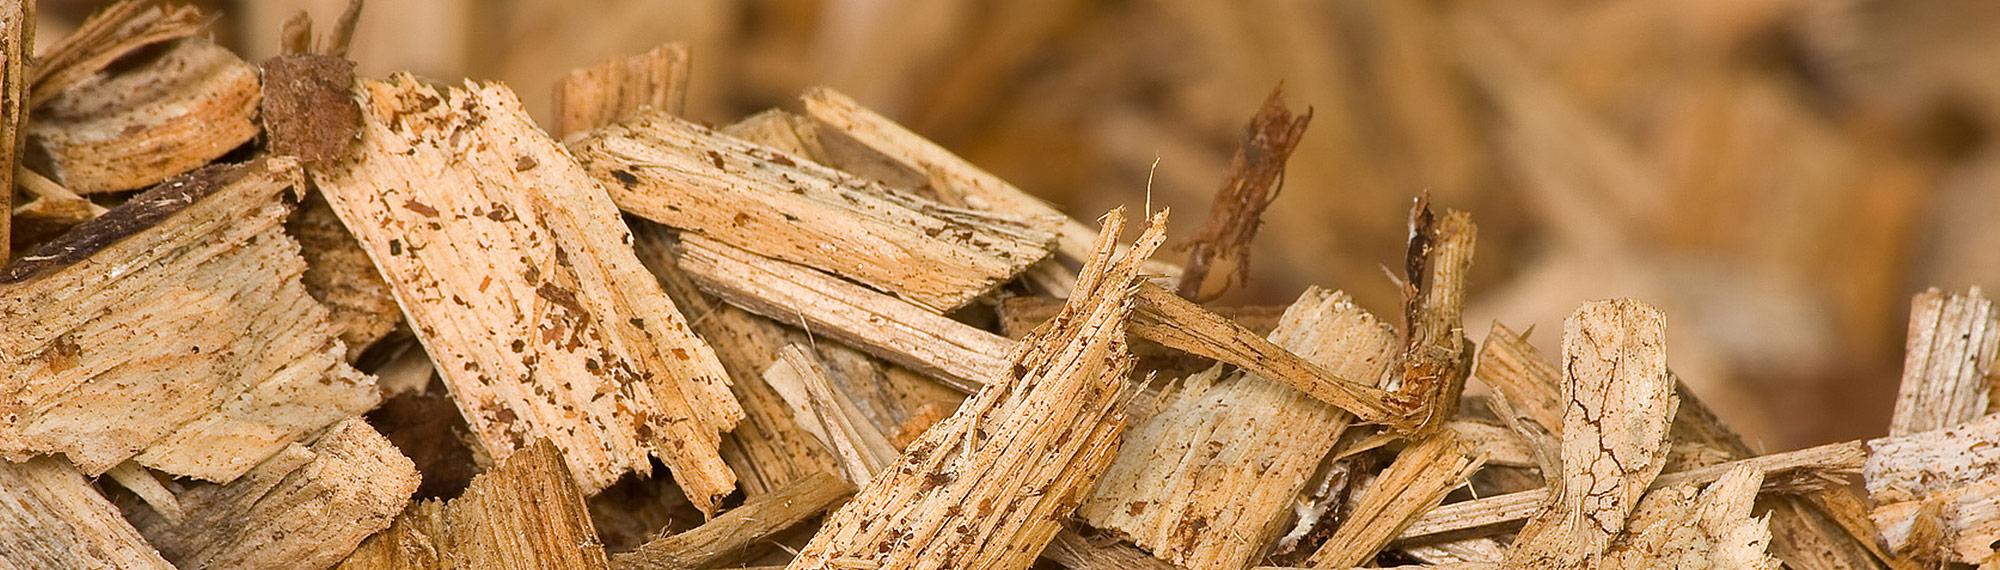 Lane Forest Products Online - Bulk Item: Wood Chips DLV